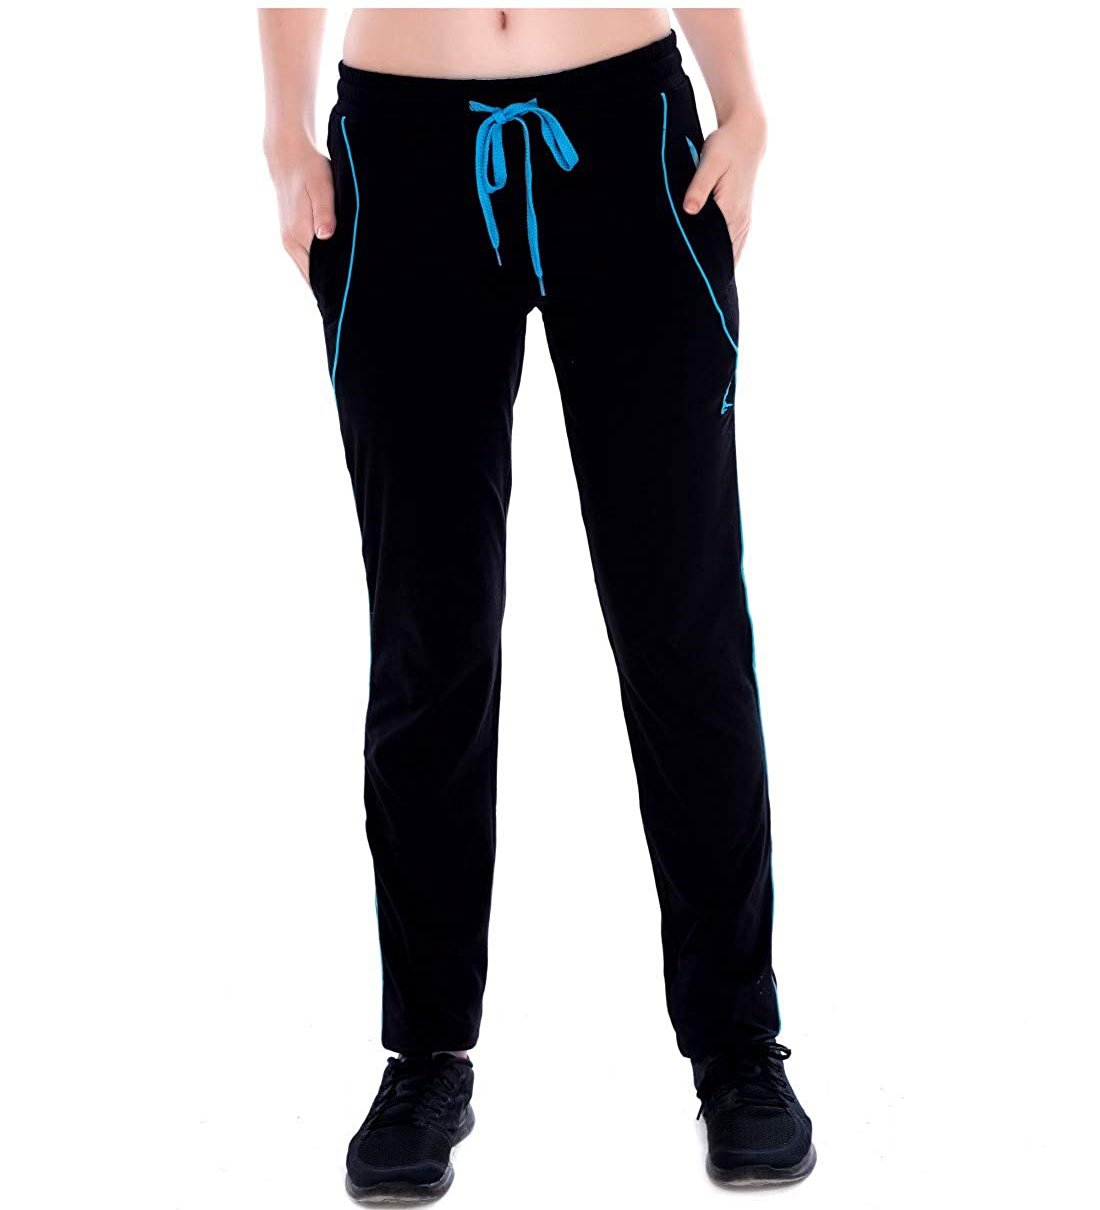 Lovable Cotton Slim Fit Black Track Pants For Women - Stilento